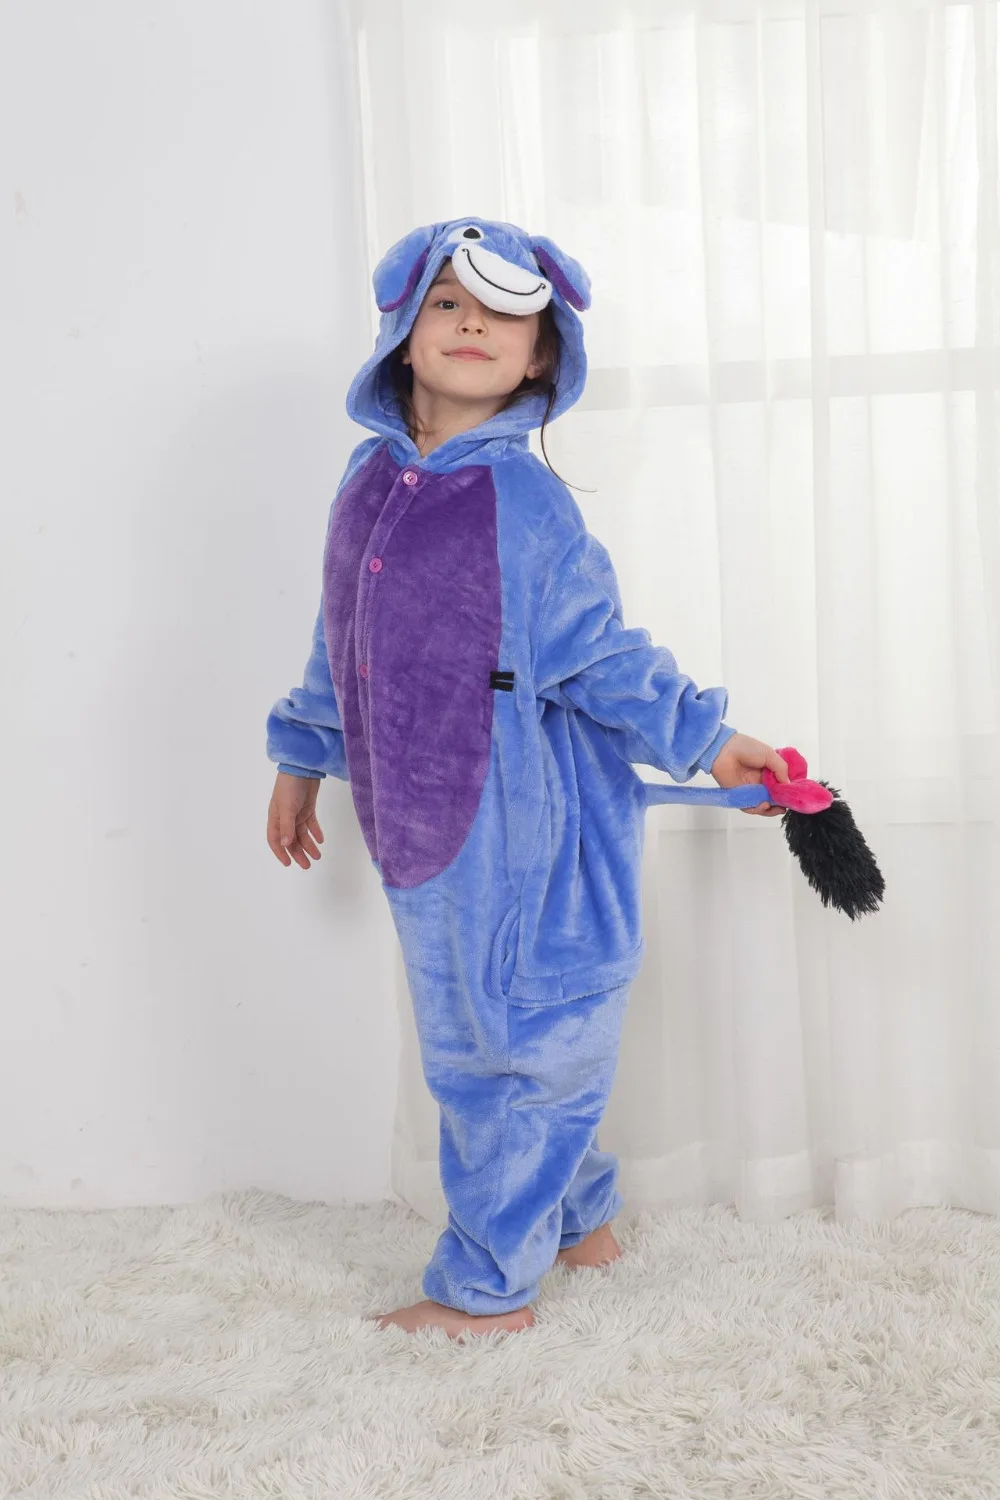 Mačka Onesies Osel Pižamo Otrok, Cosplay Kostume Otroci Unisex Helloween Božično Zabavo Sleepsuit Infantil Menino